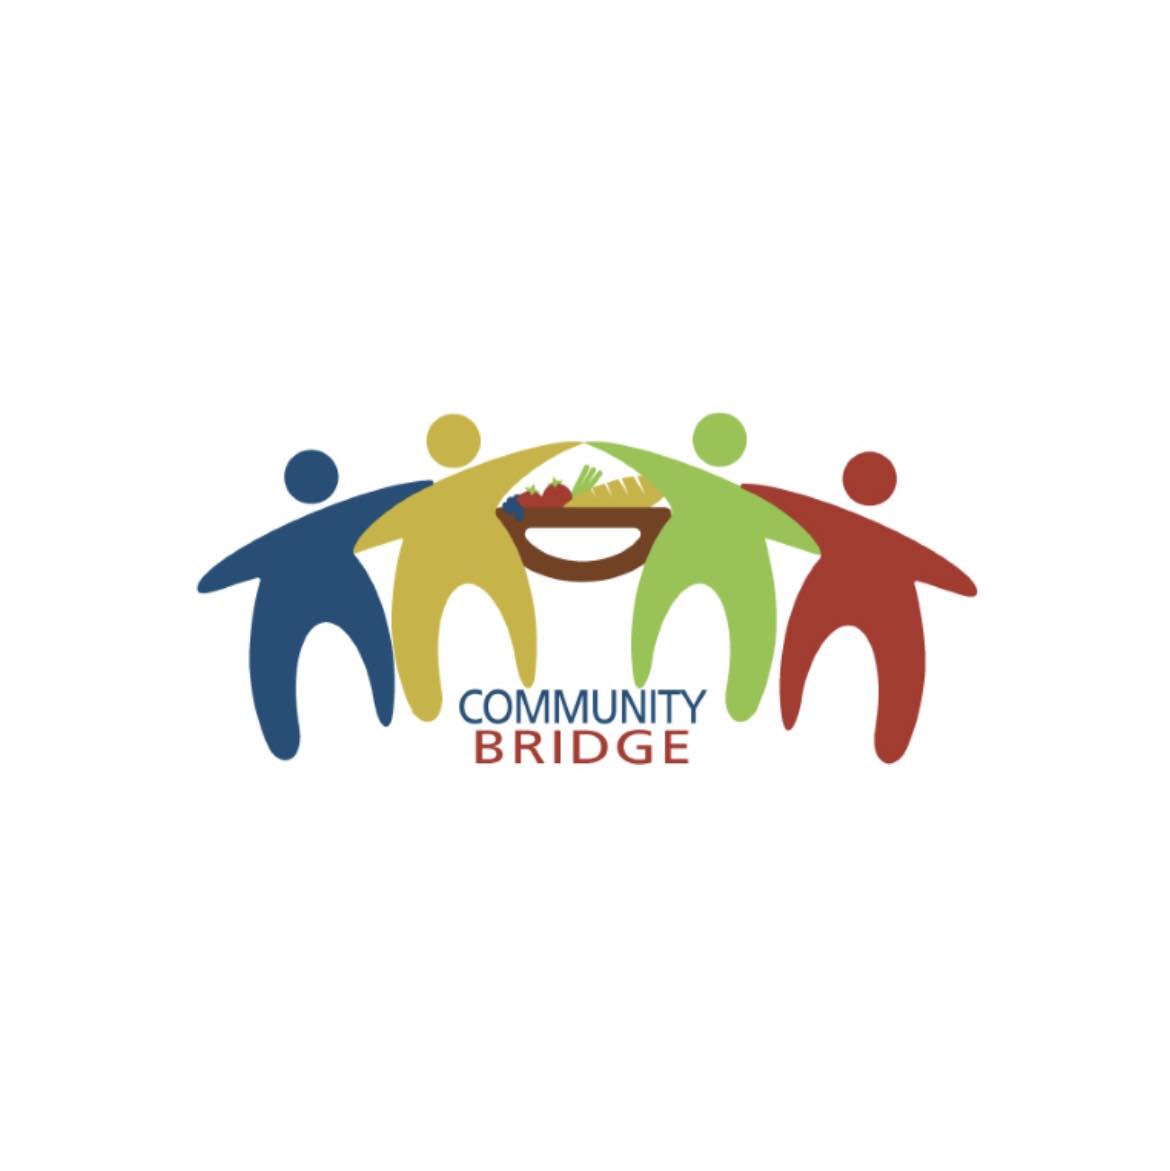 Community Bridge